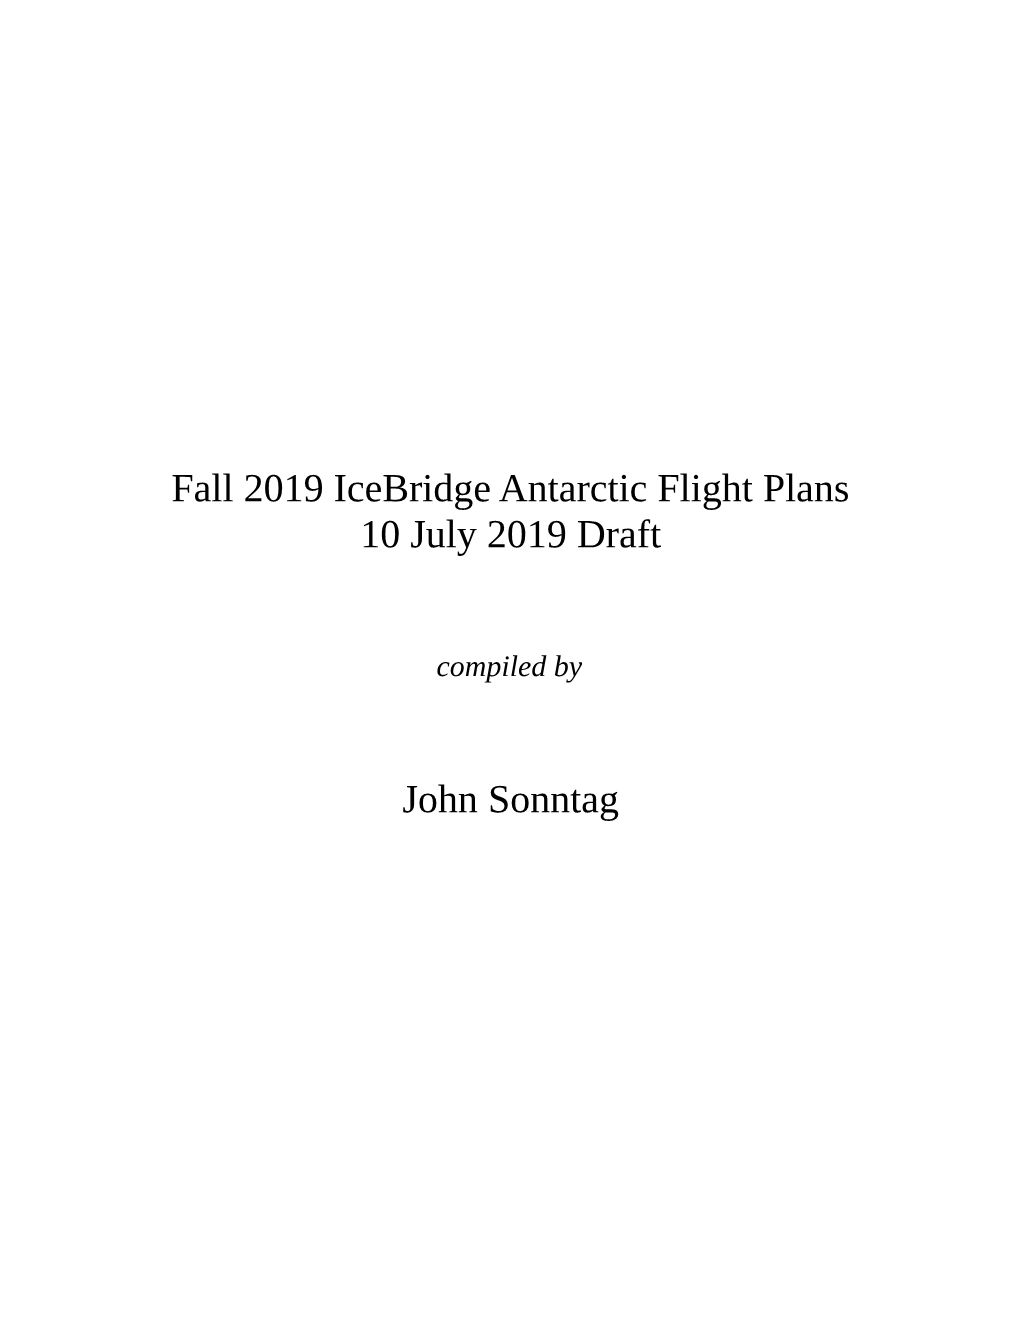 Fall 2019 Icebridge Antarctic Flight Plans 10 July 2019 Draft John